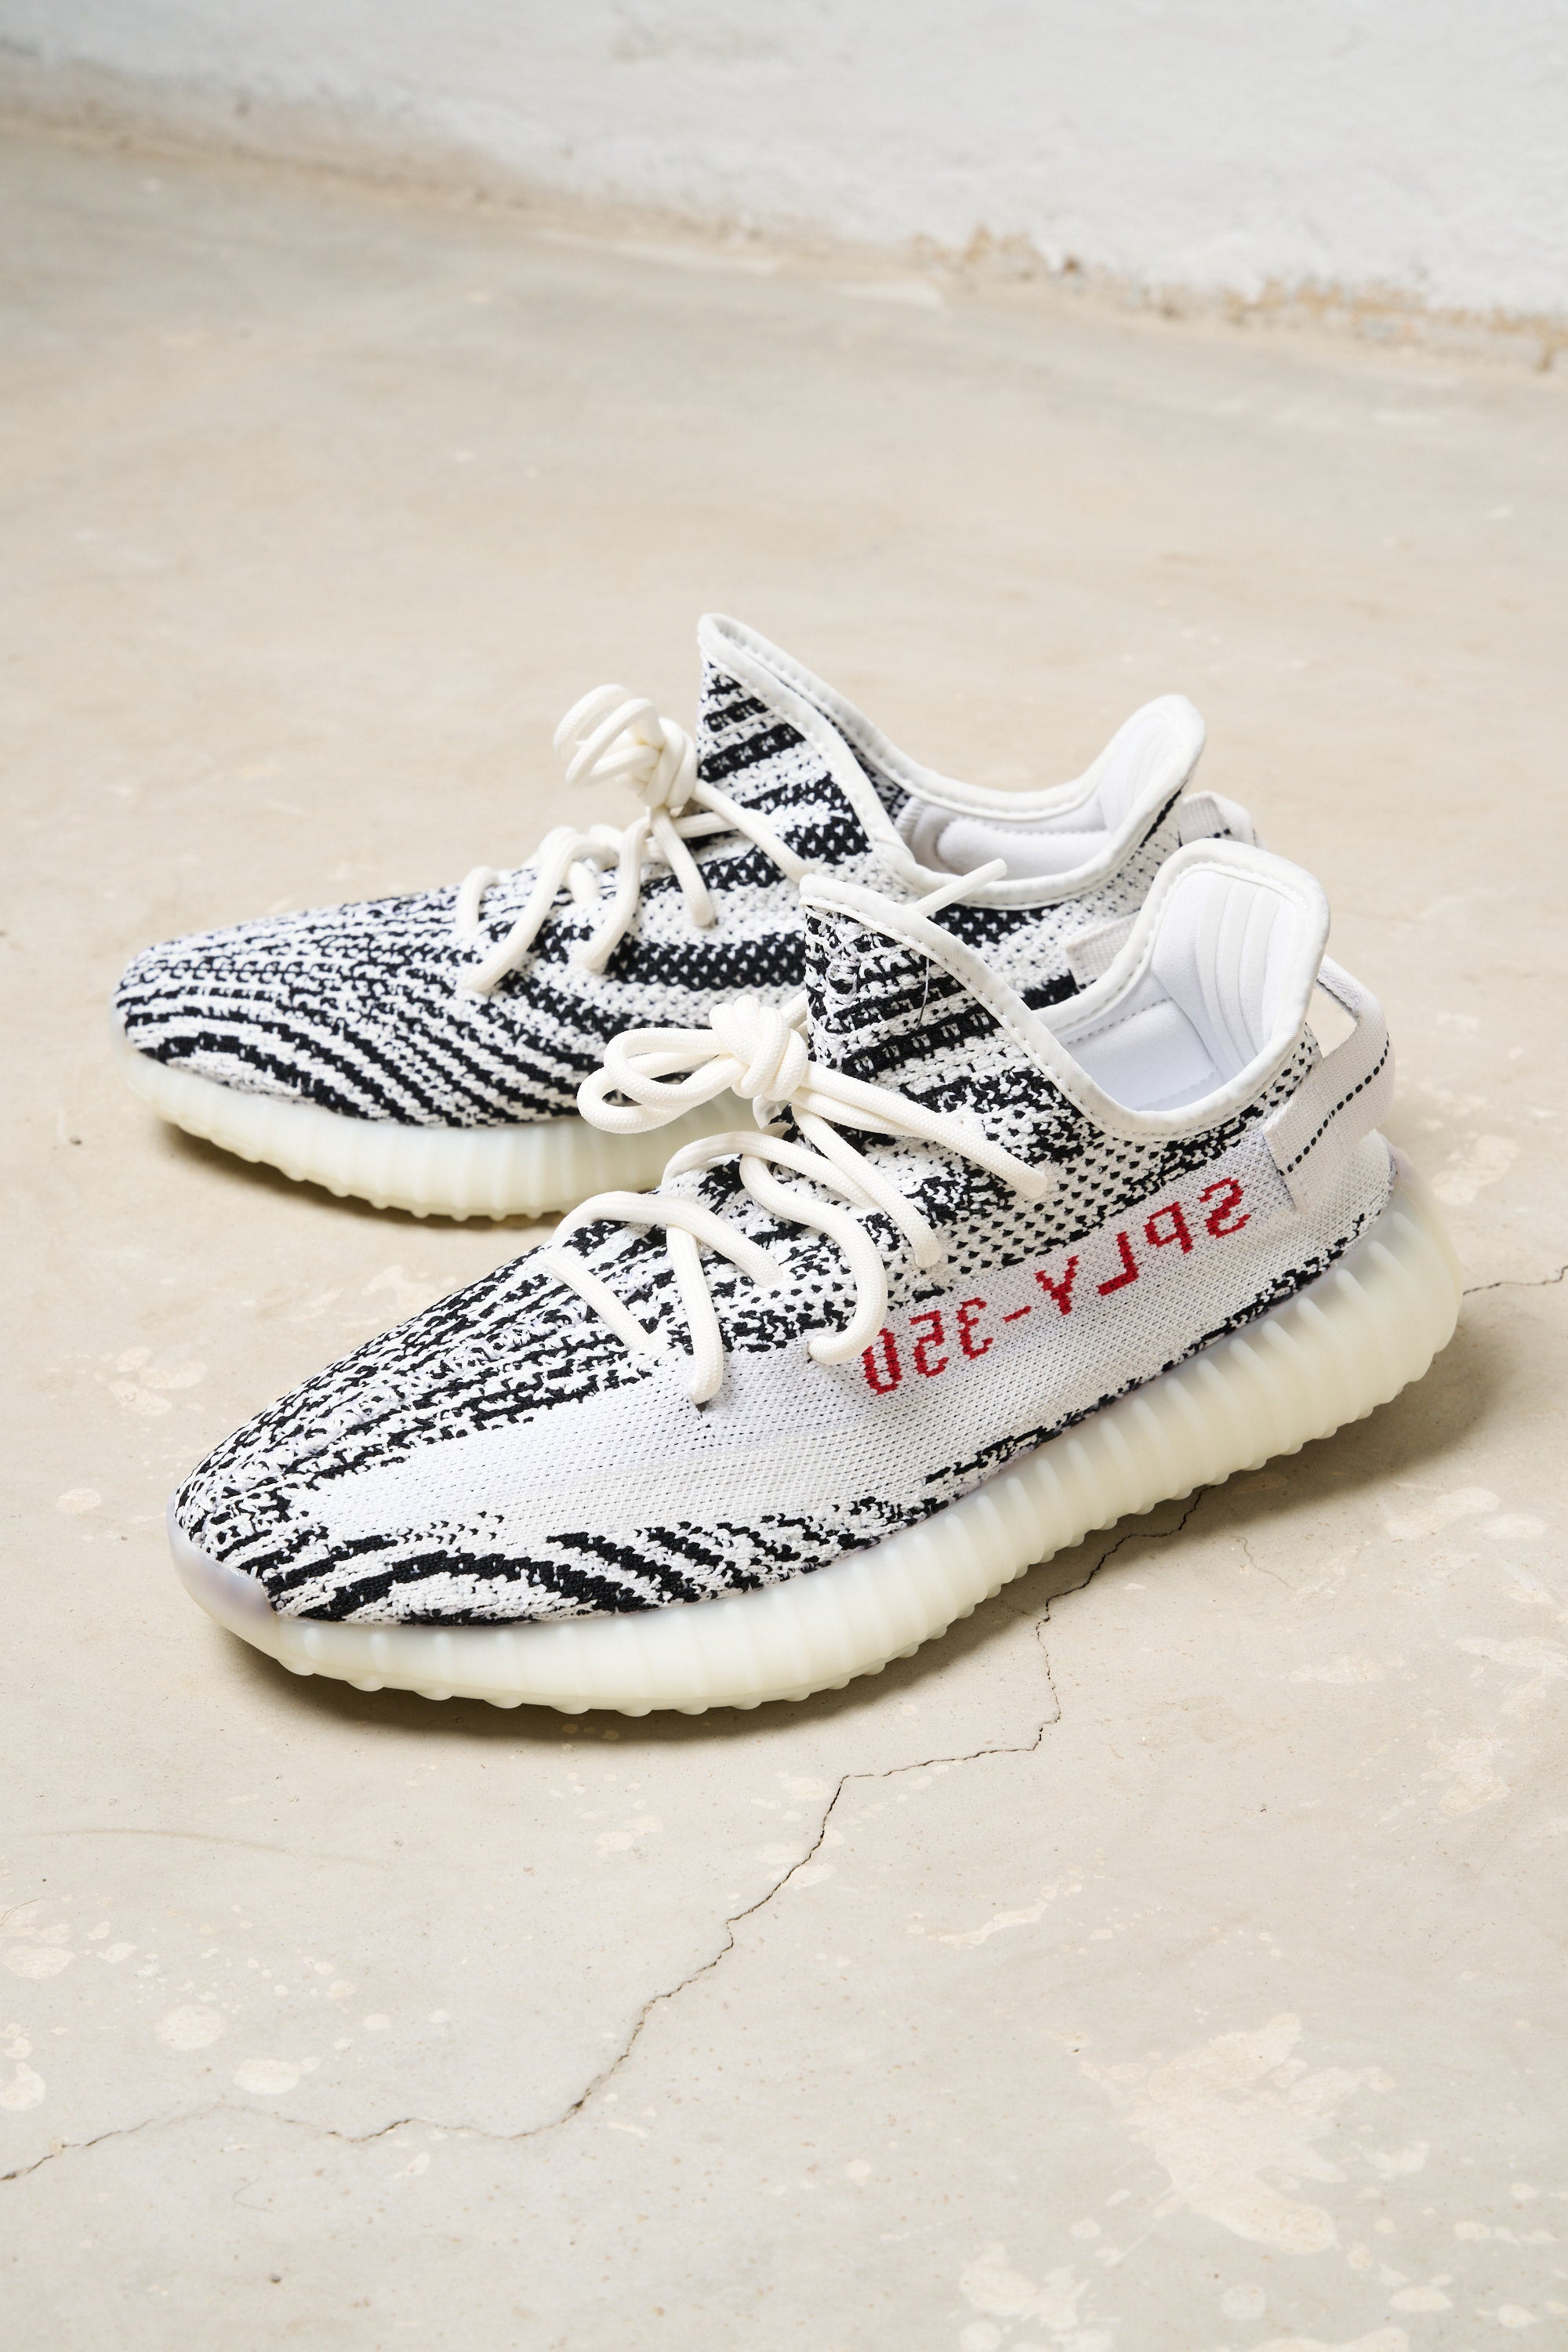 Adidas Sneakers Yeezy Boost 350 V2 Zebra Primeknit White/Black